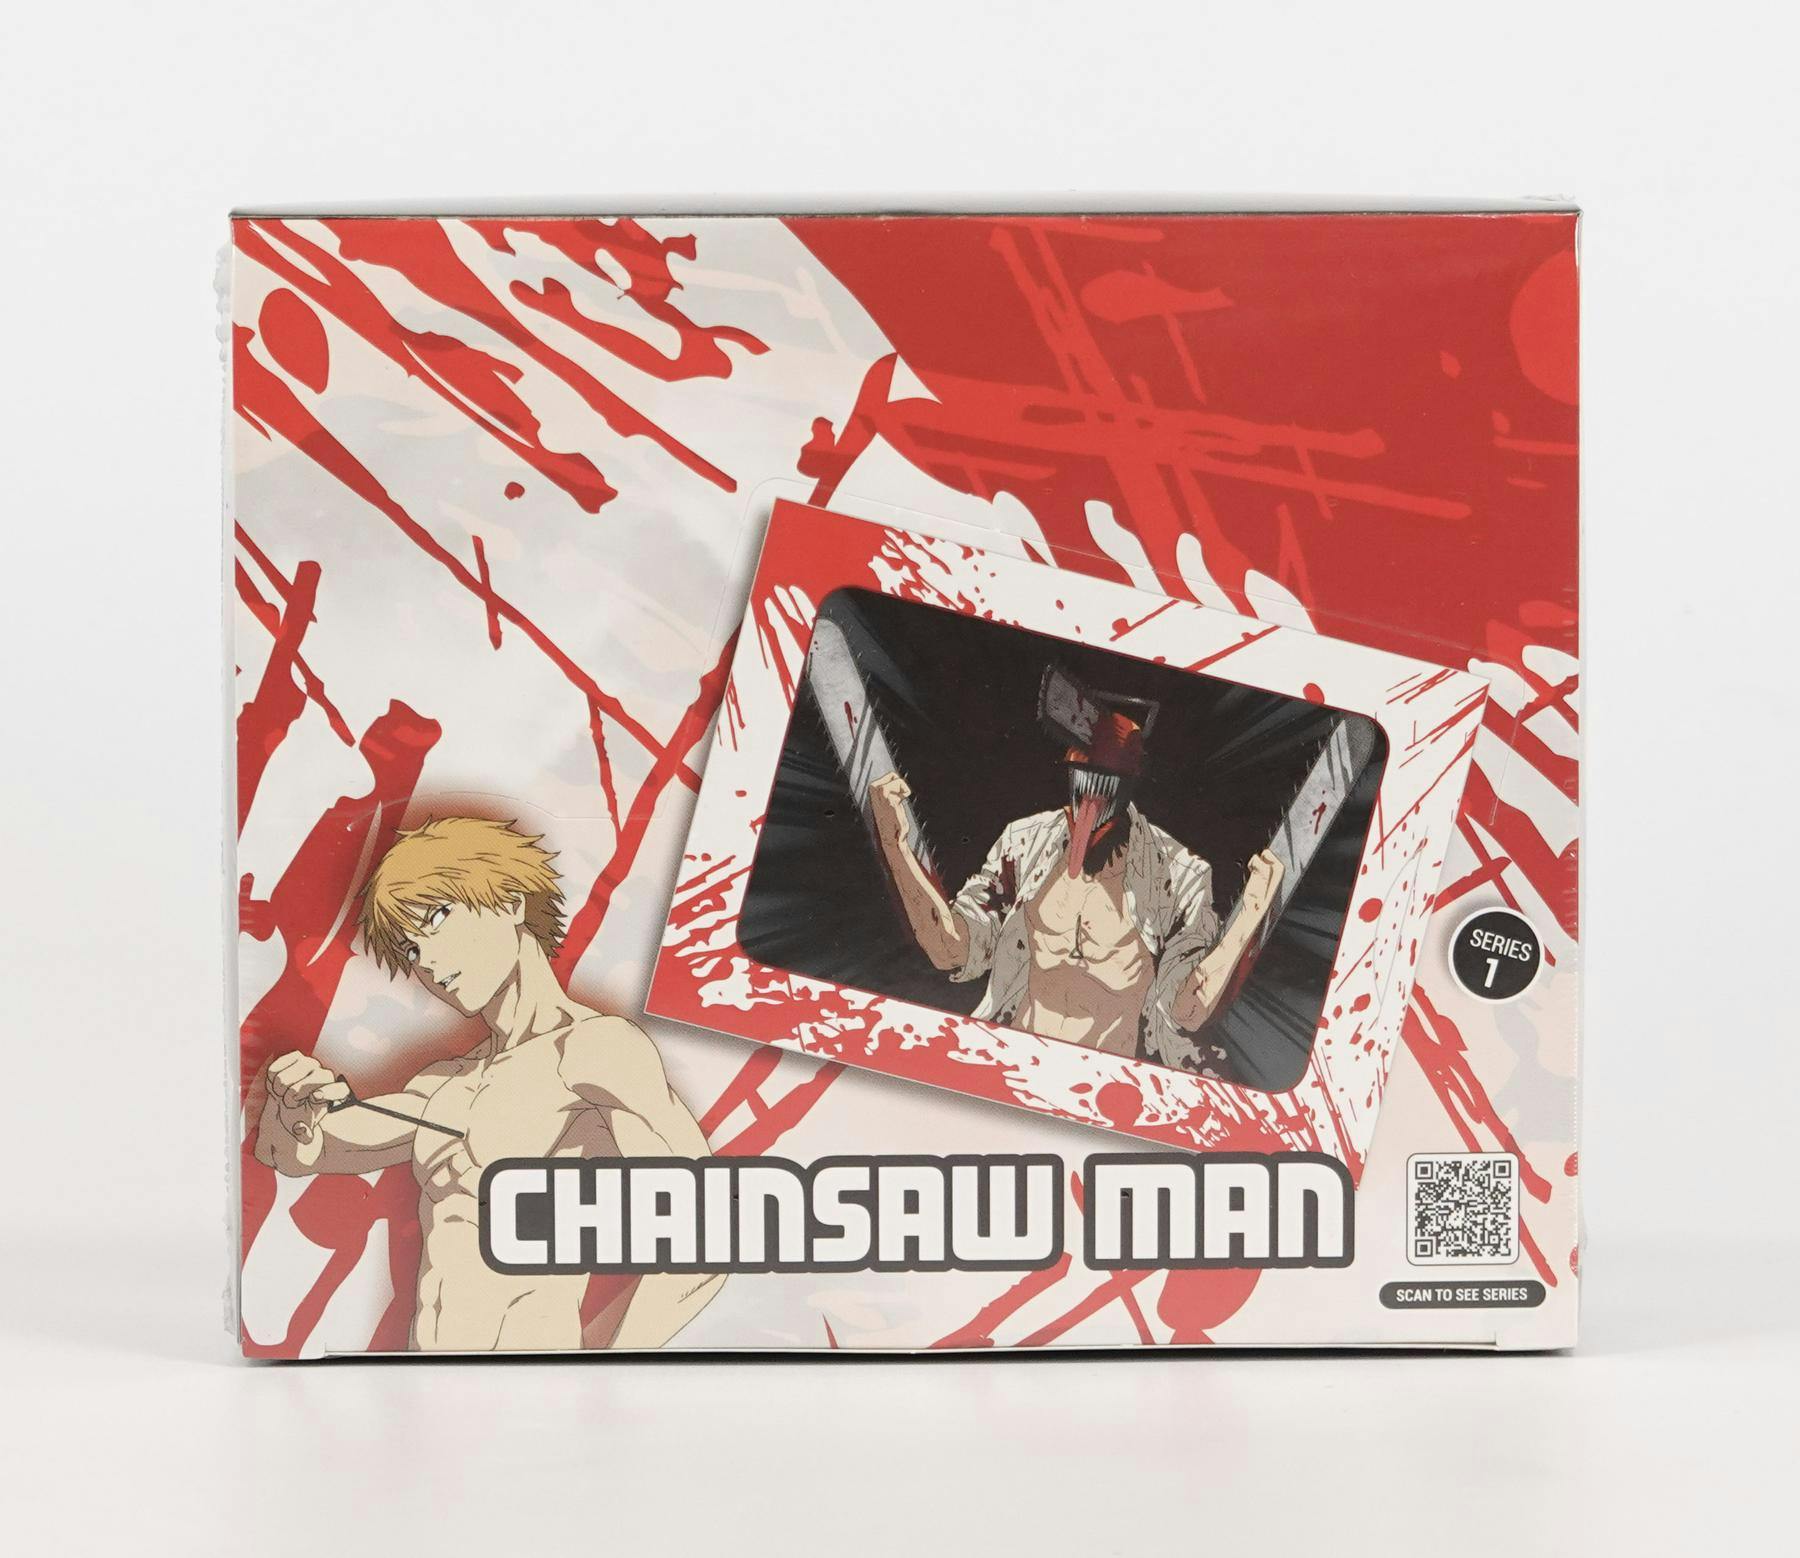 Anime Chainsaw Man Pfp by Nox